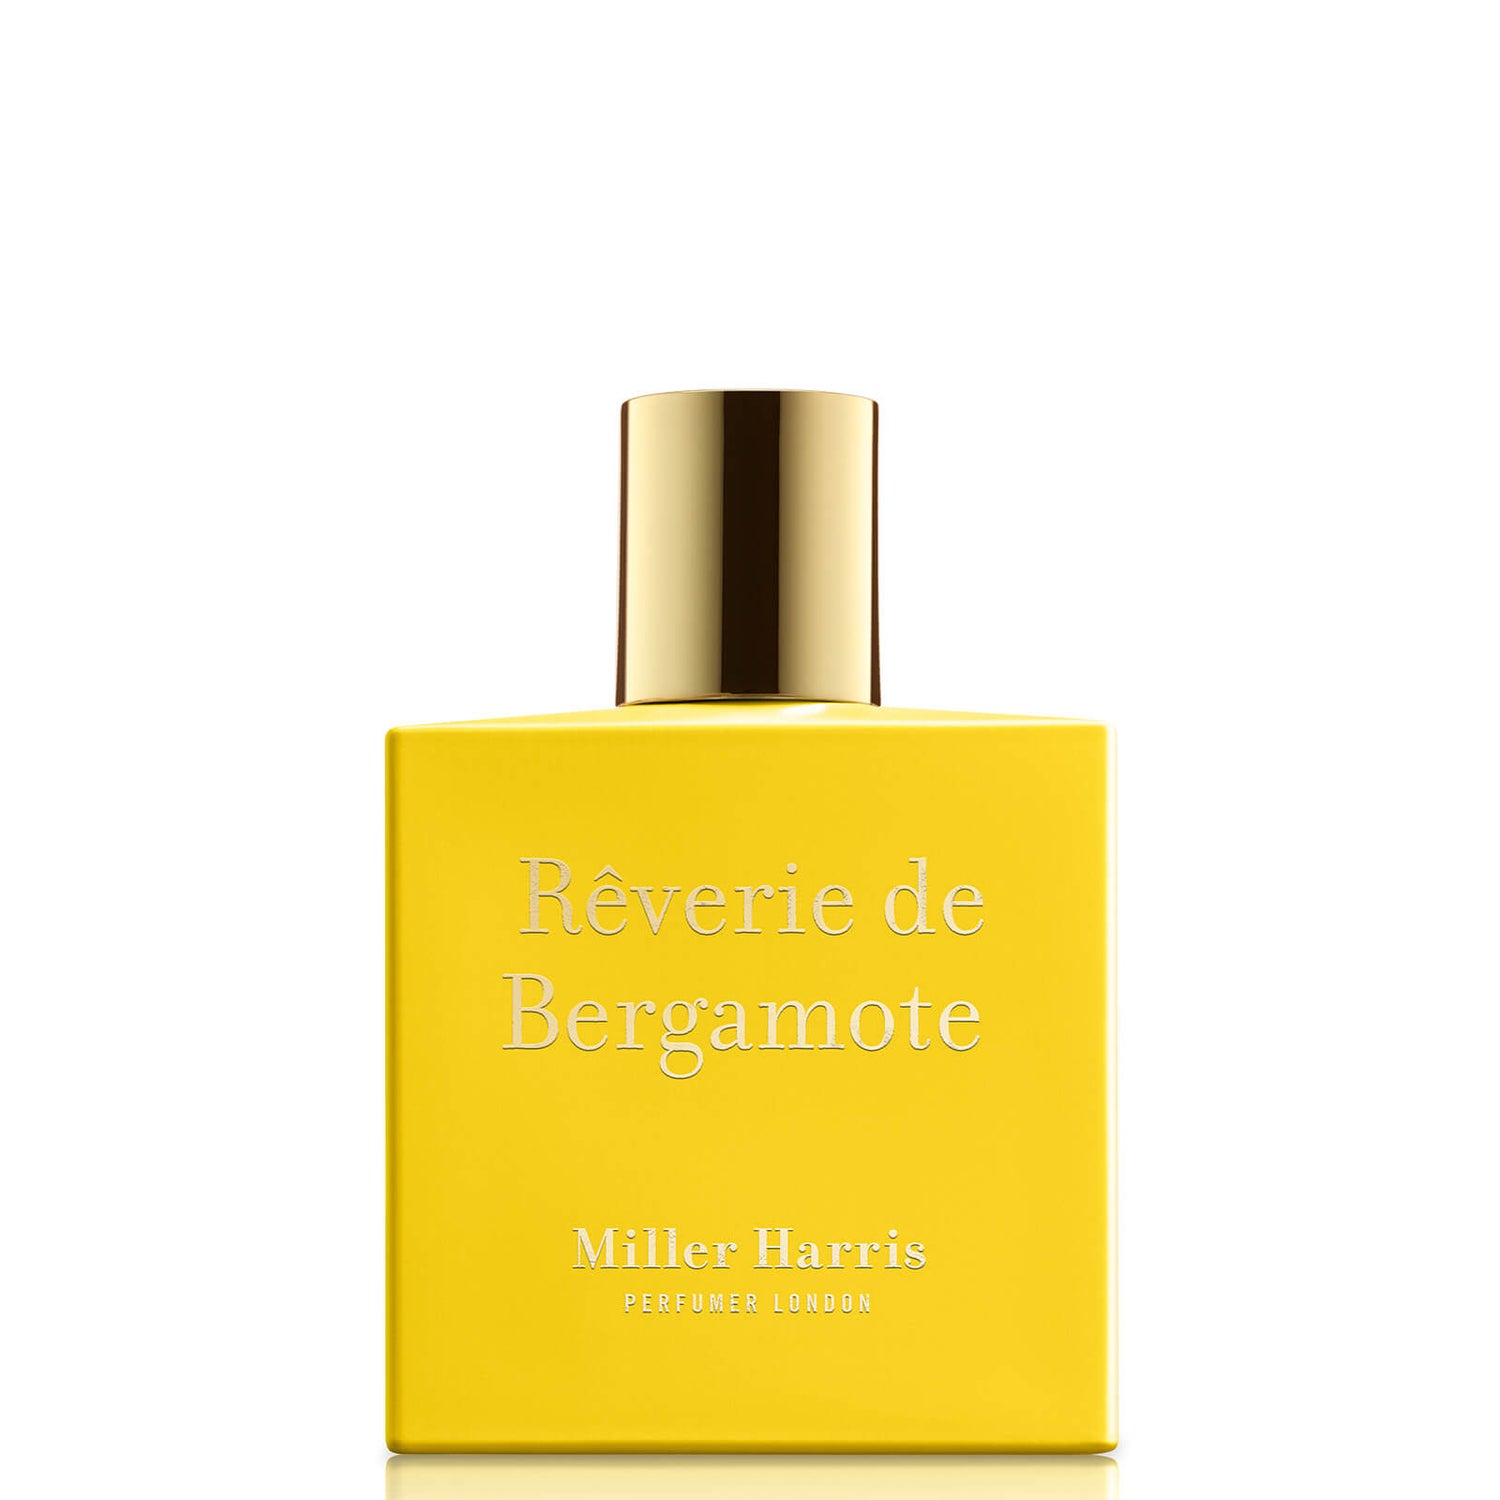 Miller Harris Reverie de Bergamote Eau de Parfum 50ml - LOOKFANTASTIC